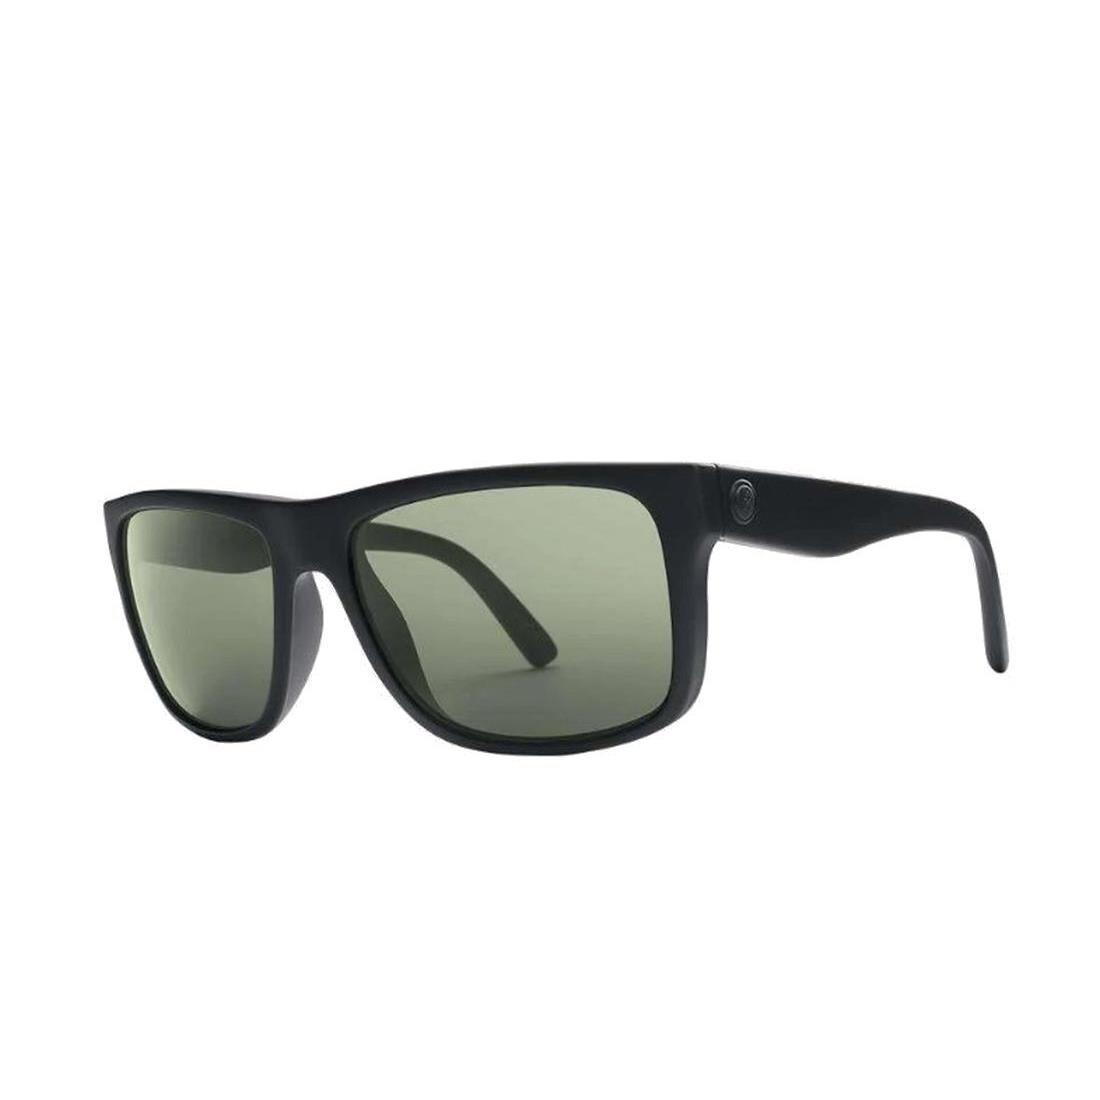 Electric Swingarm Sunglasses Matte Black with Grey Polarized Lens